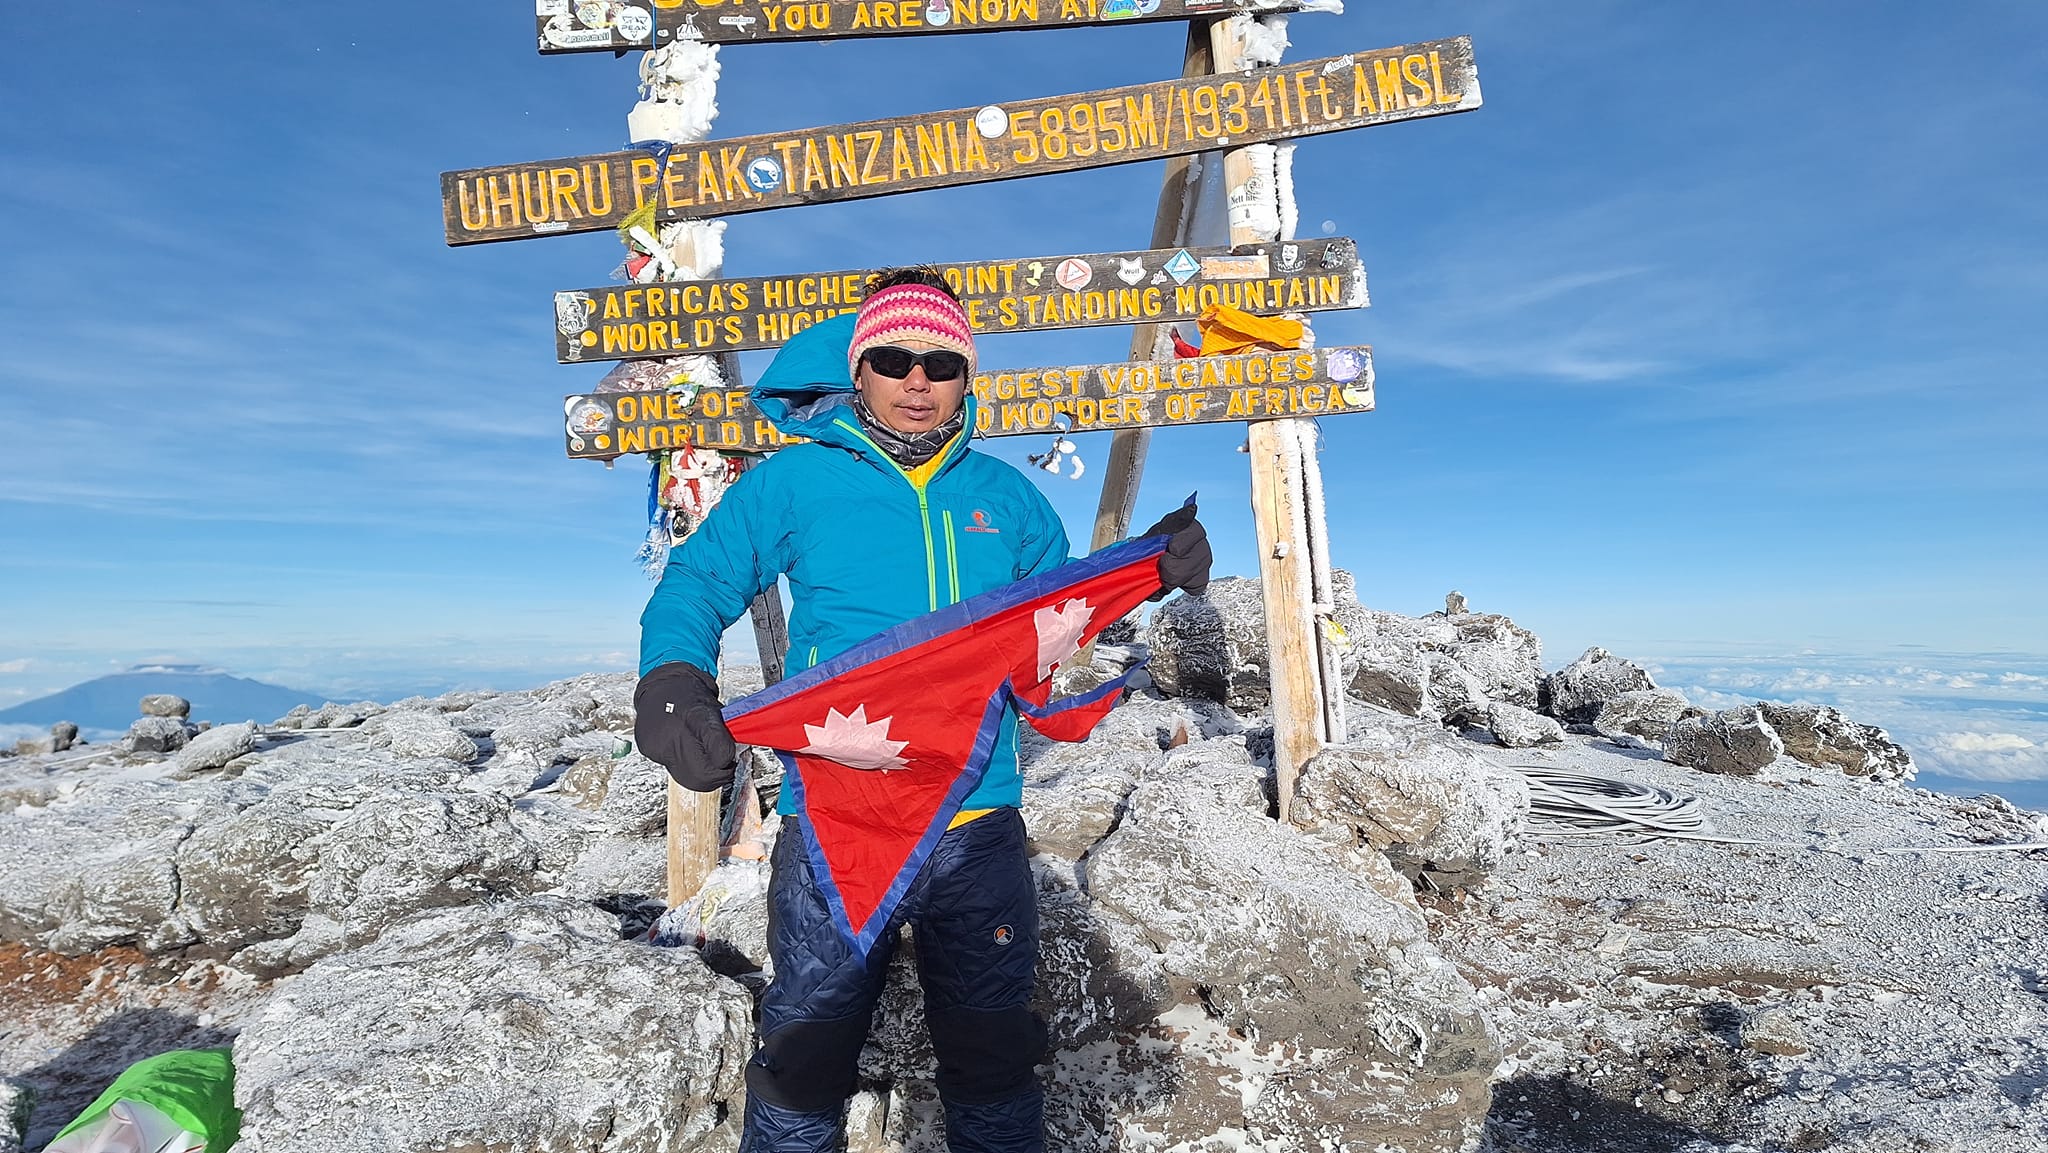 Nepali climber Prakash Raj Pandey summits Kilimanjaro, Africa's tallest peak